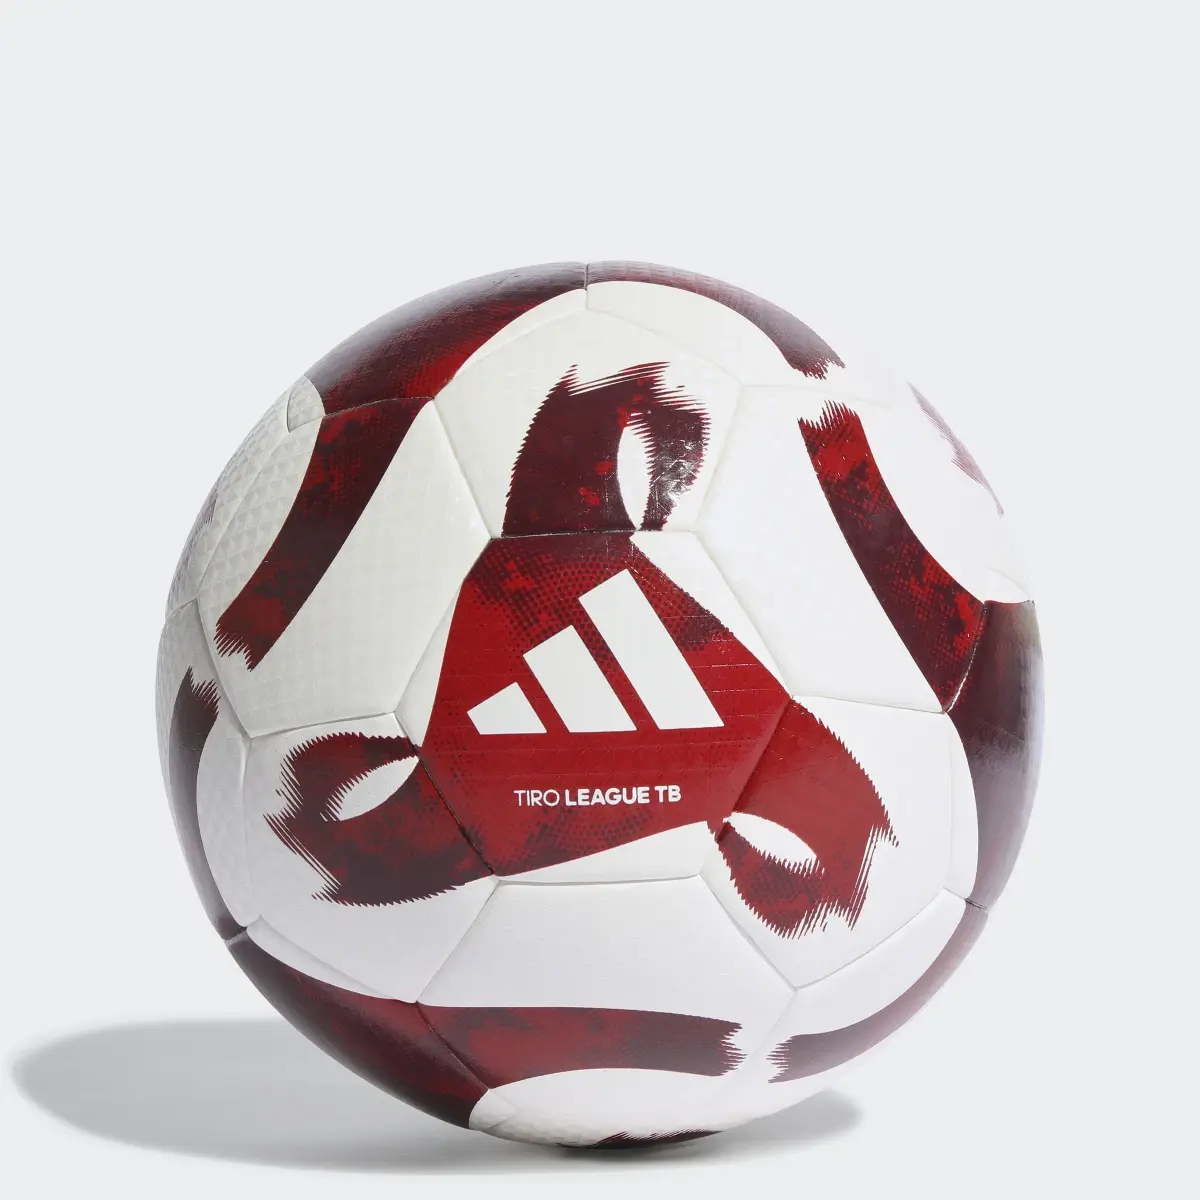 Adidas Tiro League Thermally Bonded Football. 1